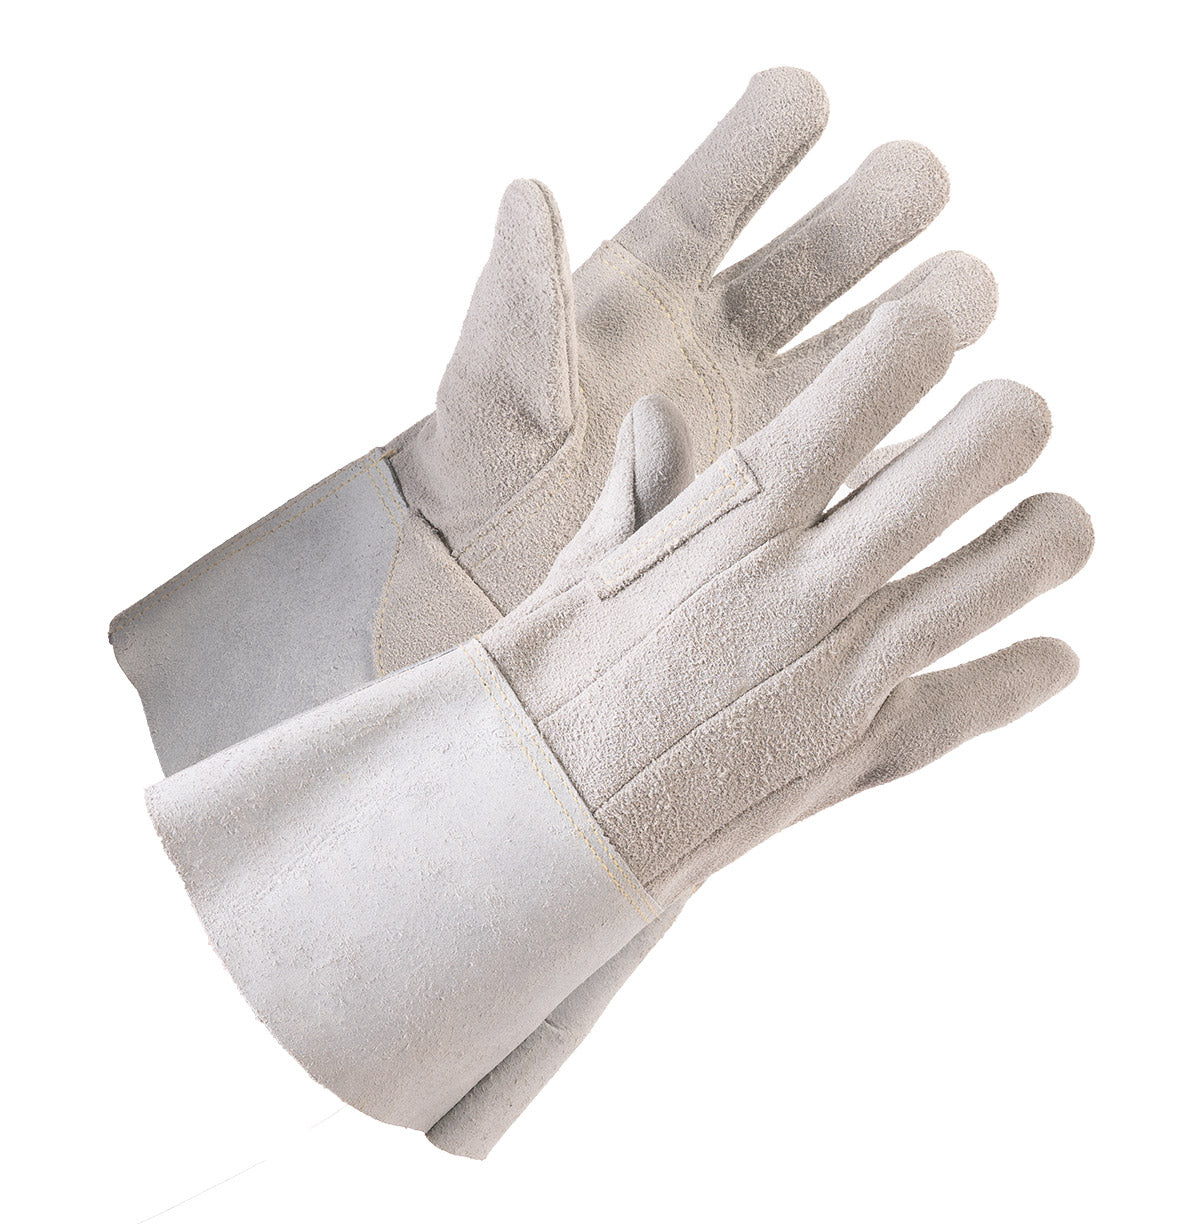 Carpincho Split Leather Sewn Kevlar® Welding Glove - Large